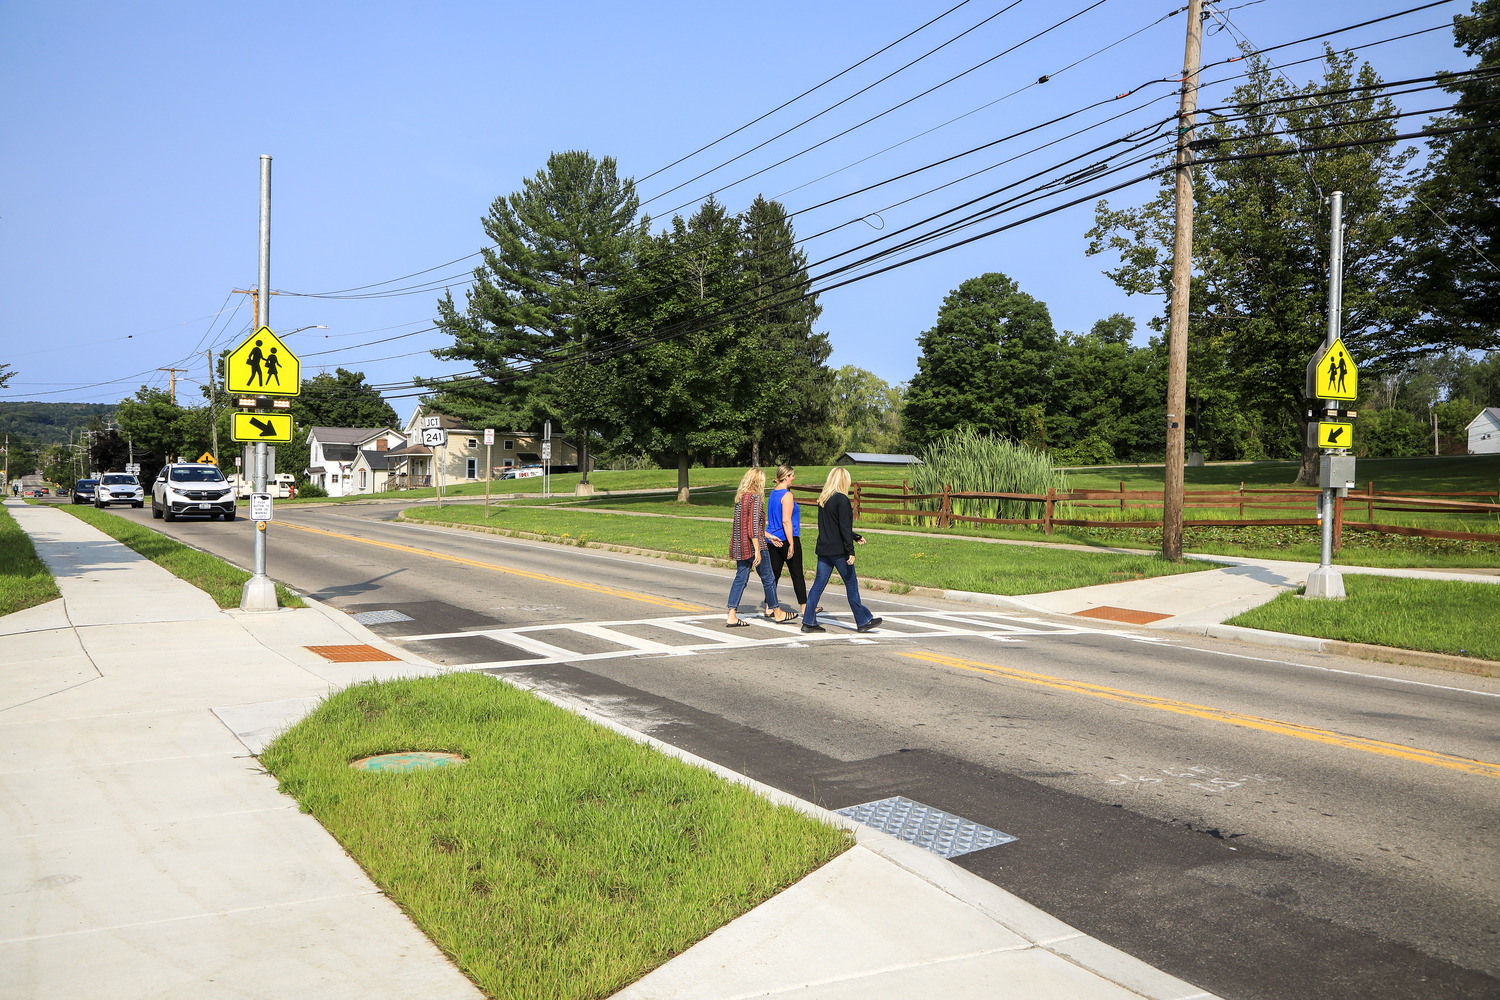 Town of Randolph Pedestrian Safety with pedestrians crossing crosswalk